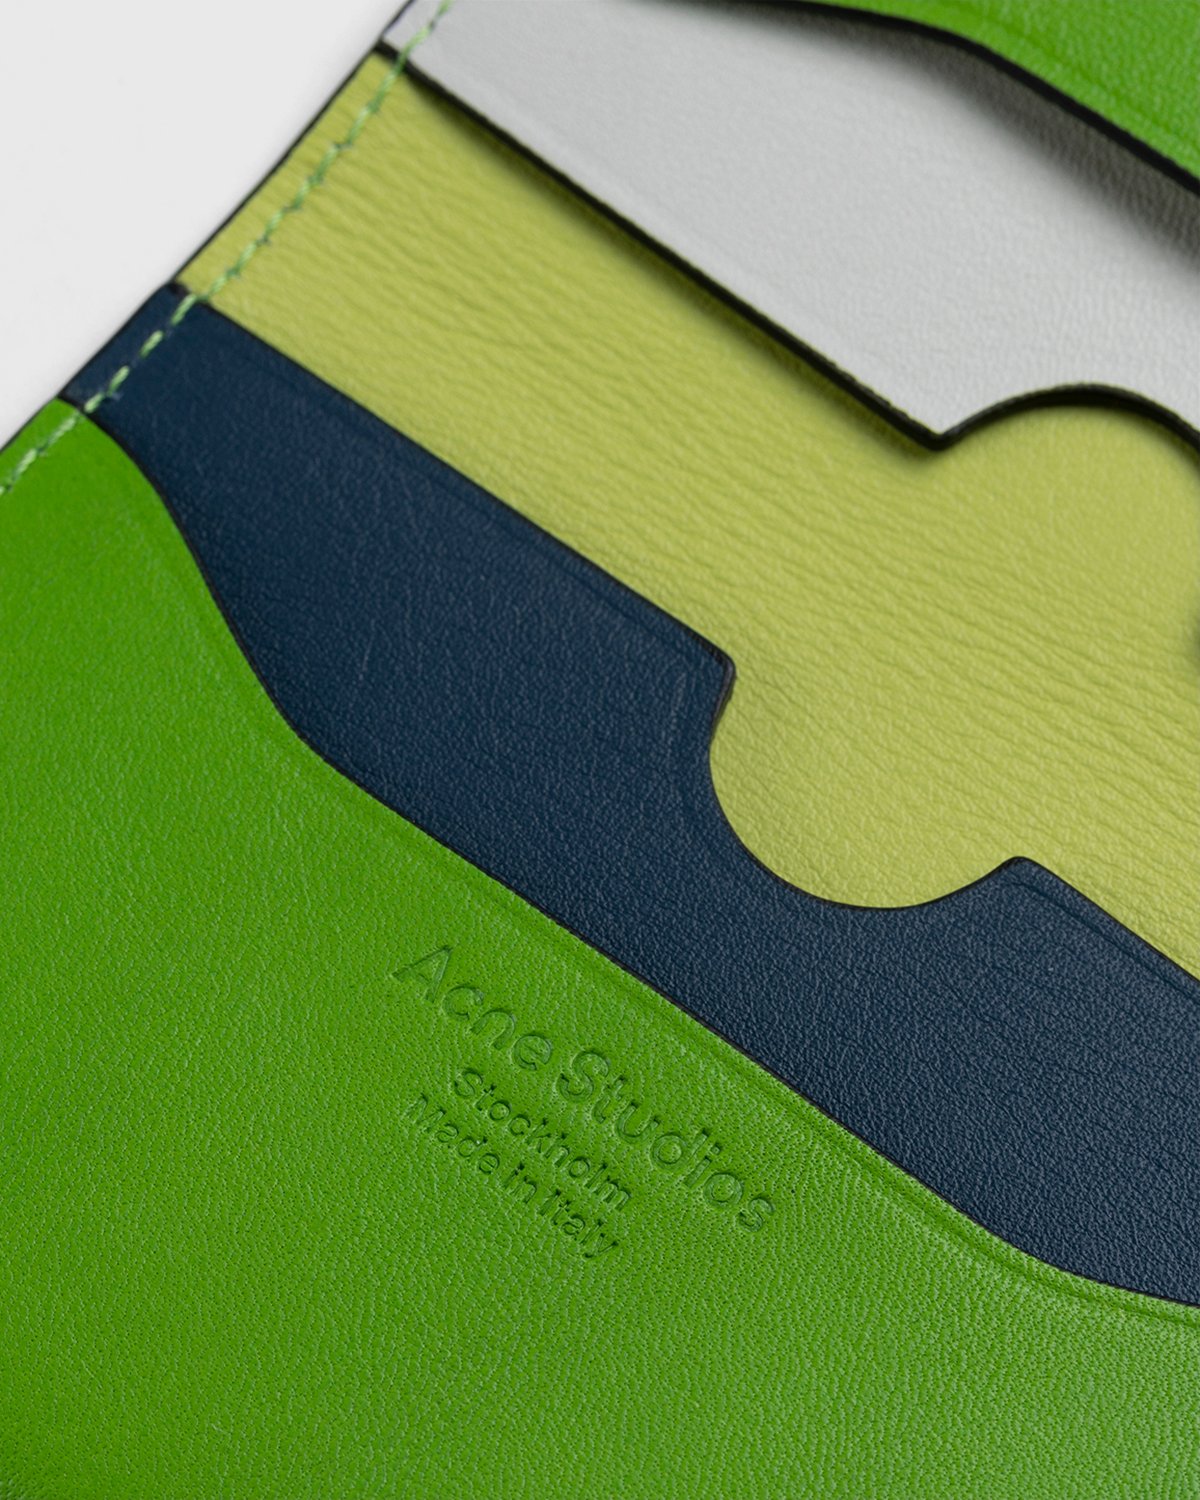 Acne Studios - Leather Card Case Multi Green - Accessories - Green - Image 5